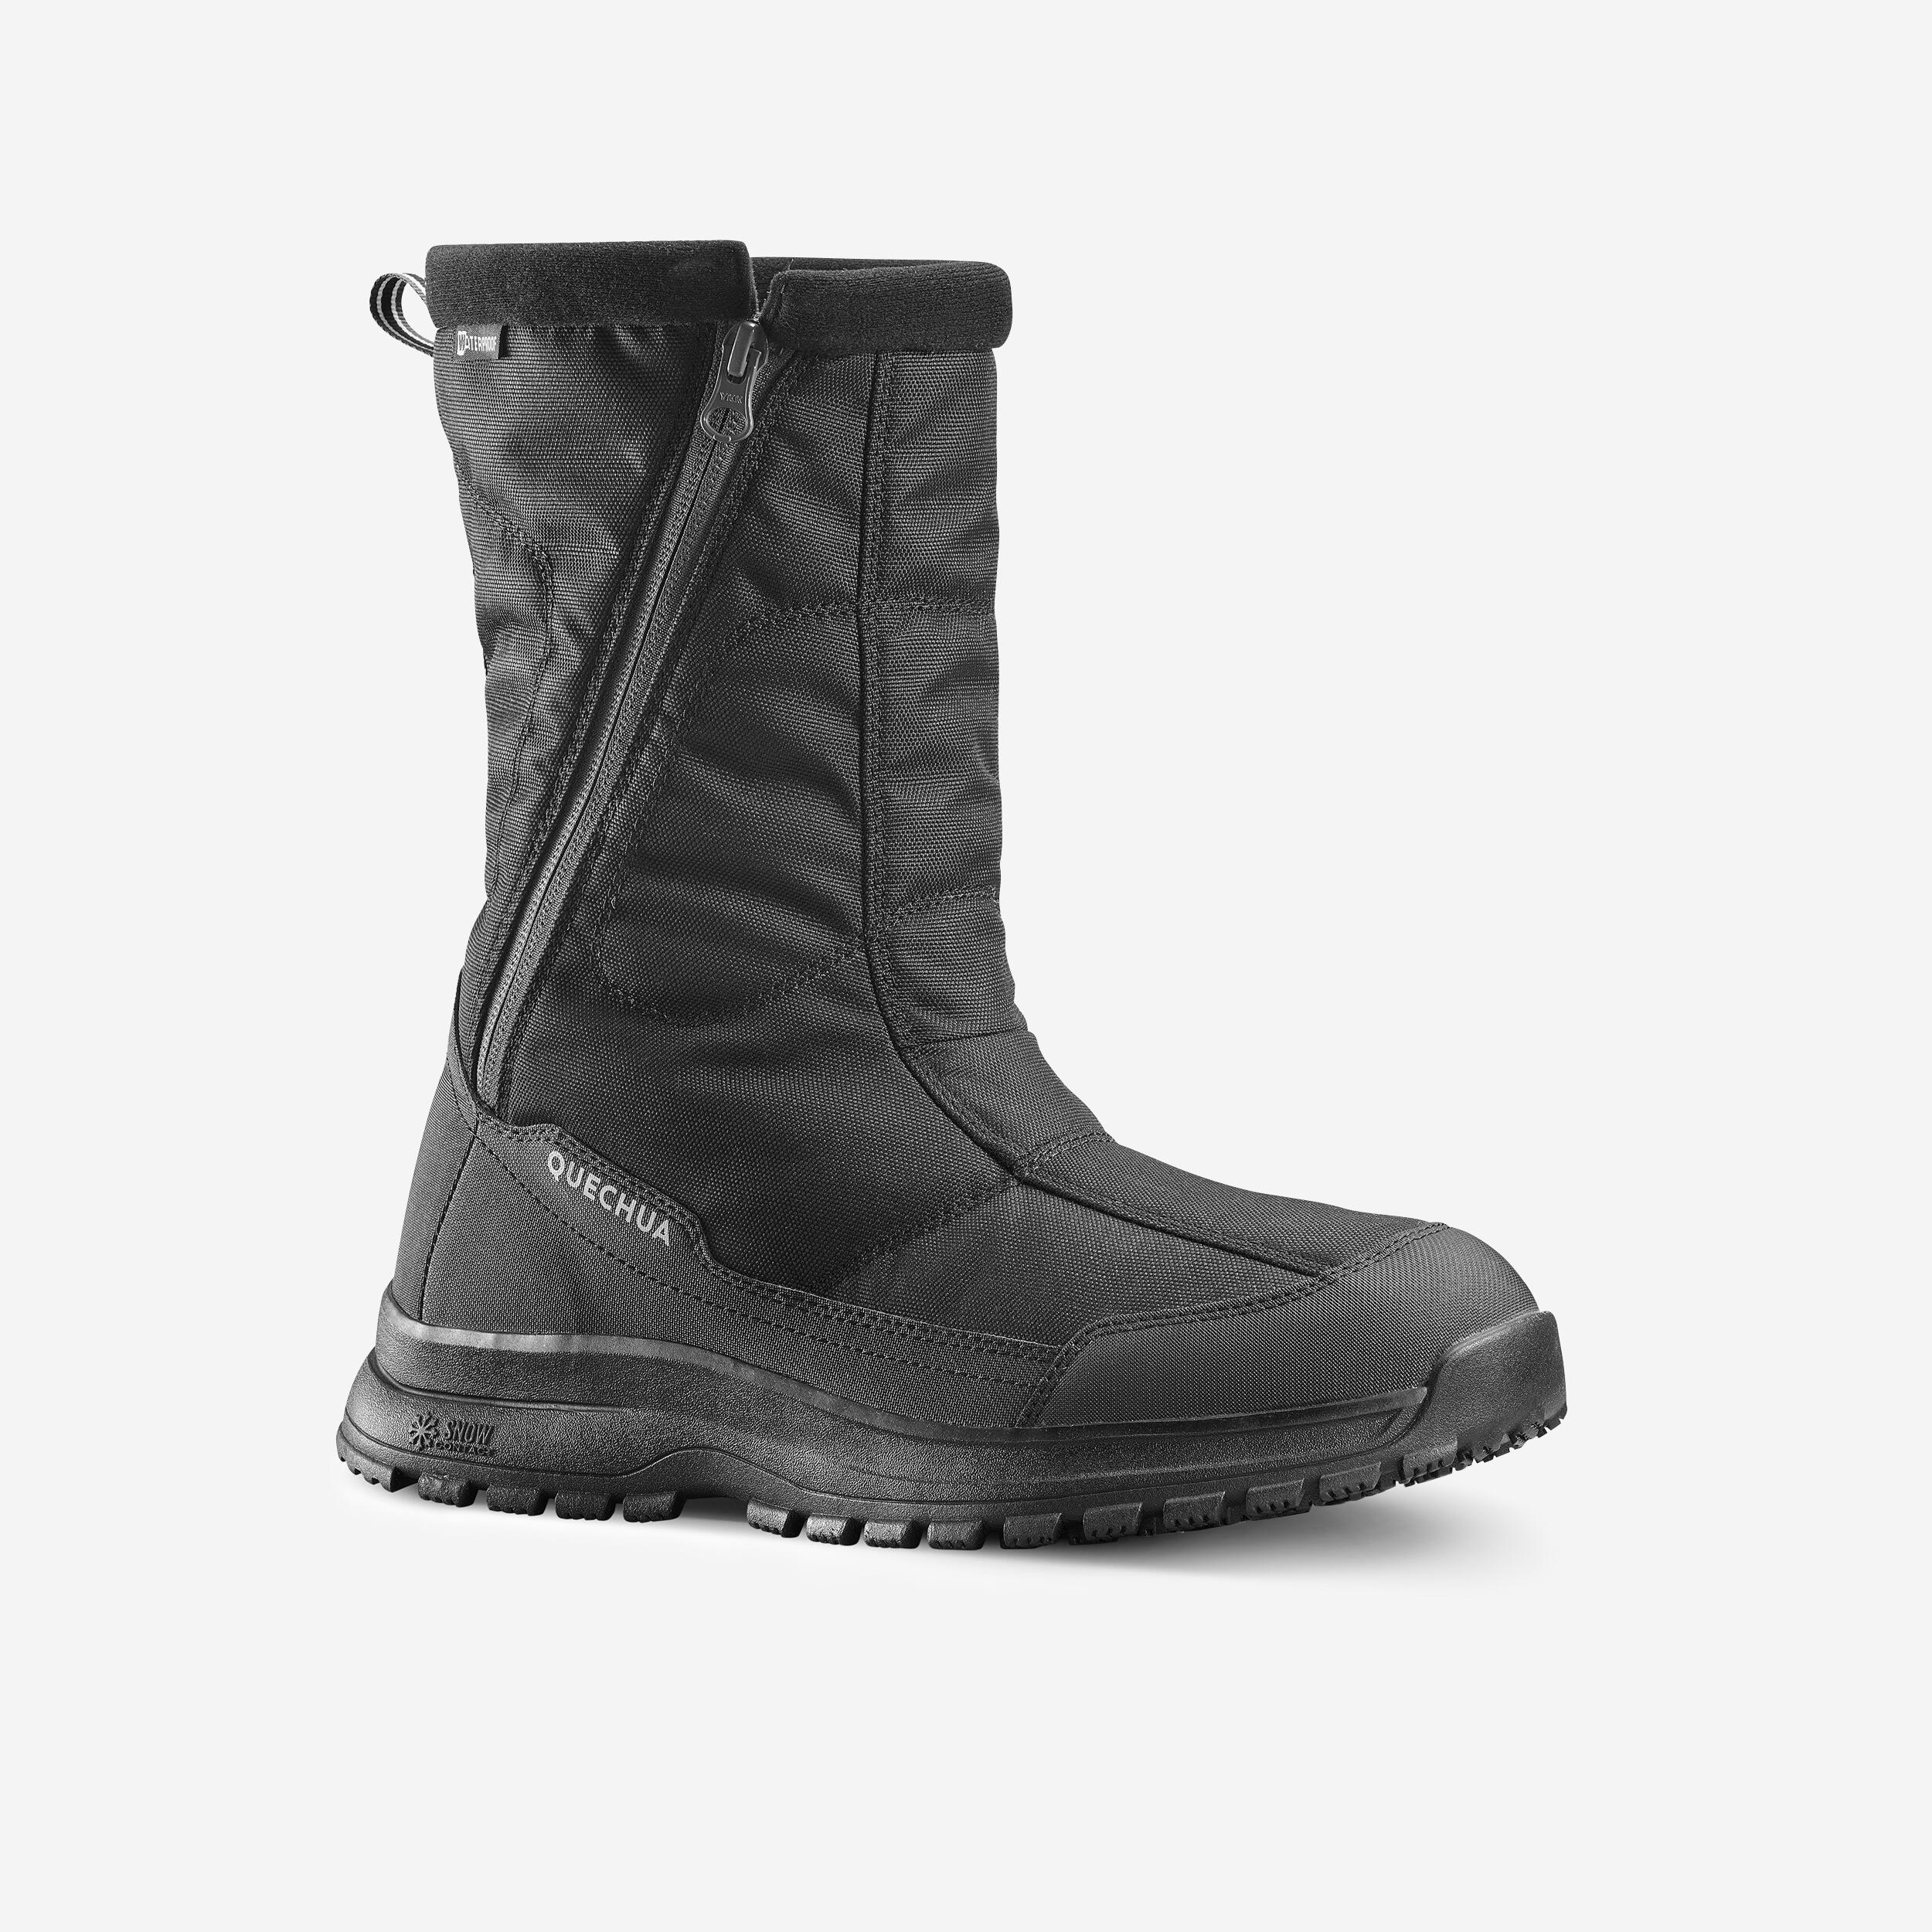 QUECHUA Men's warm waterproof snow hiking boots  - SH100 Zip